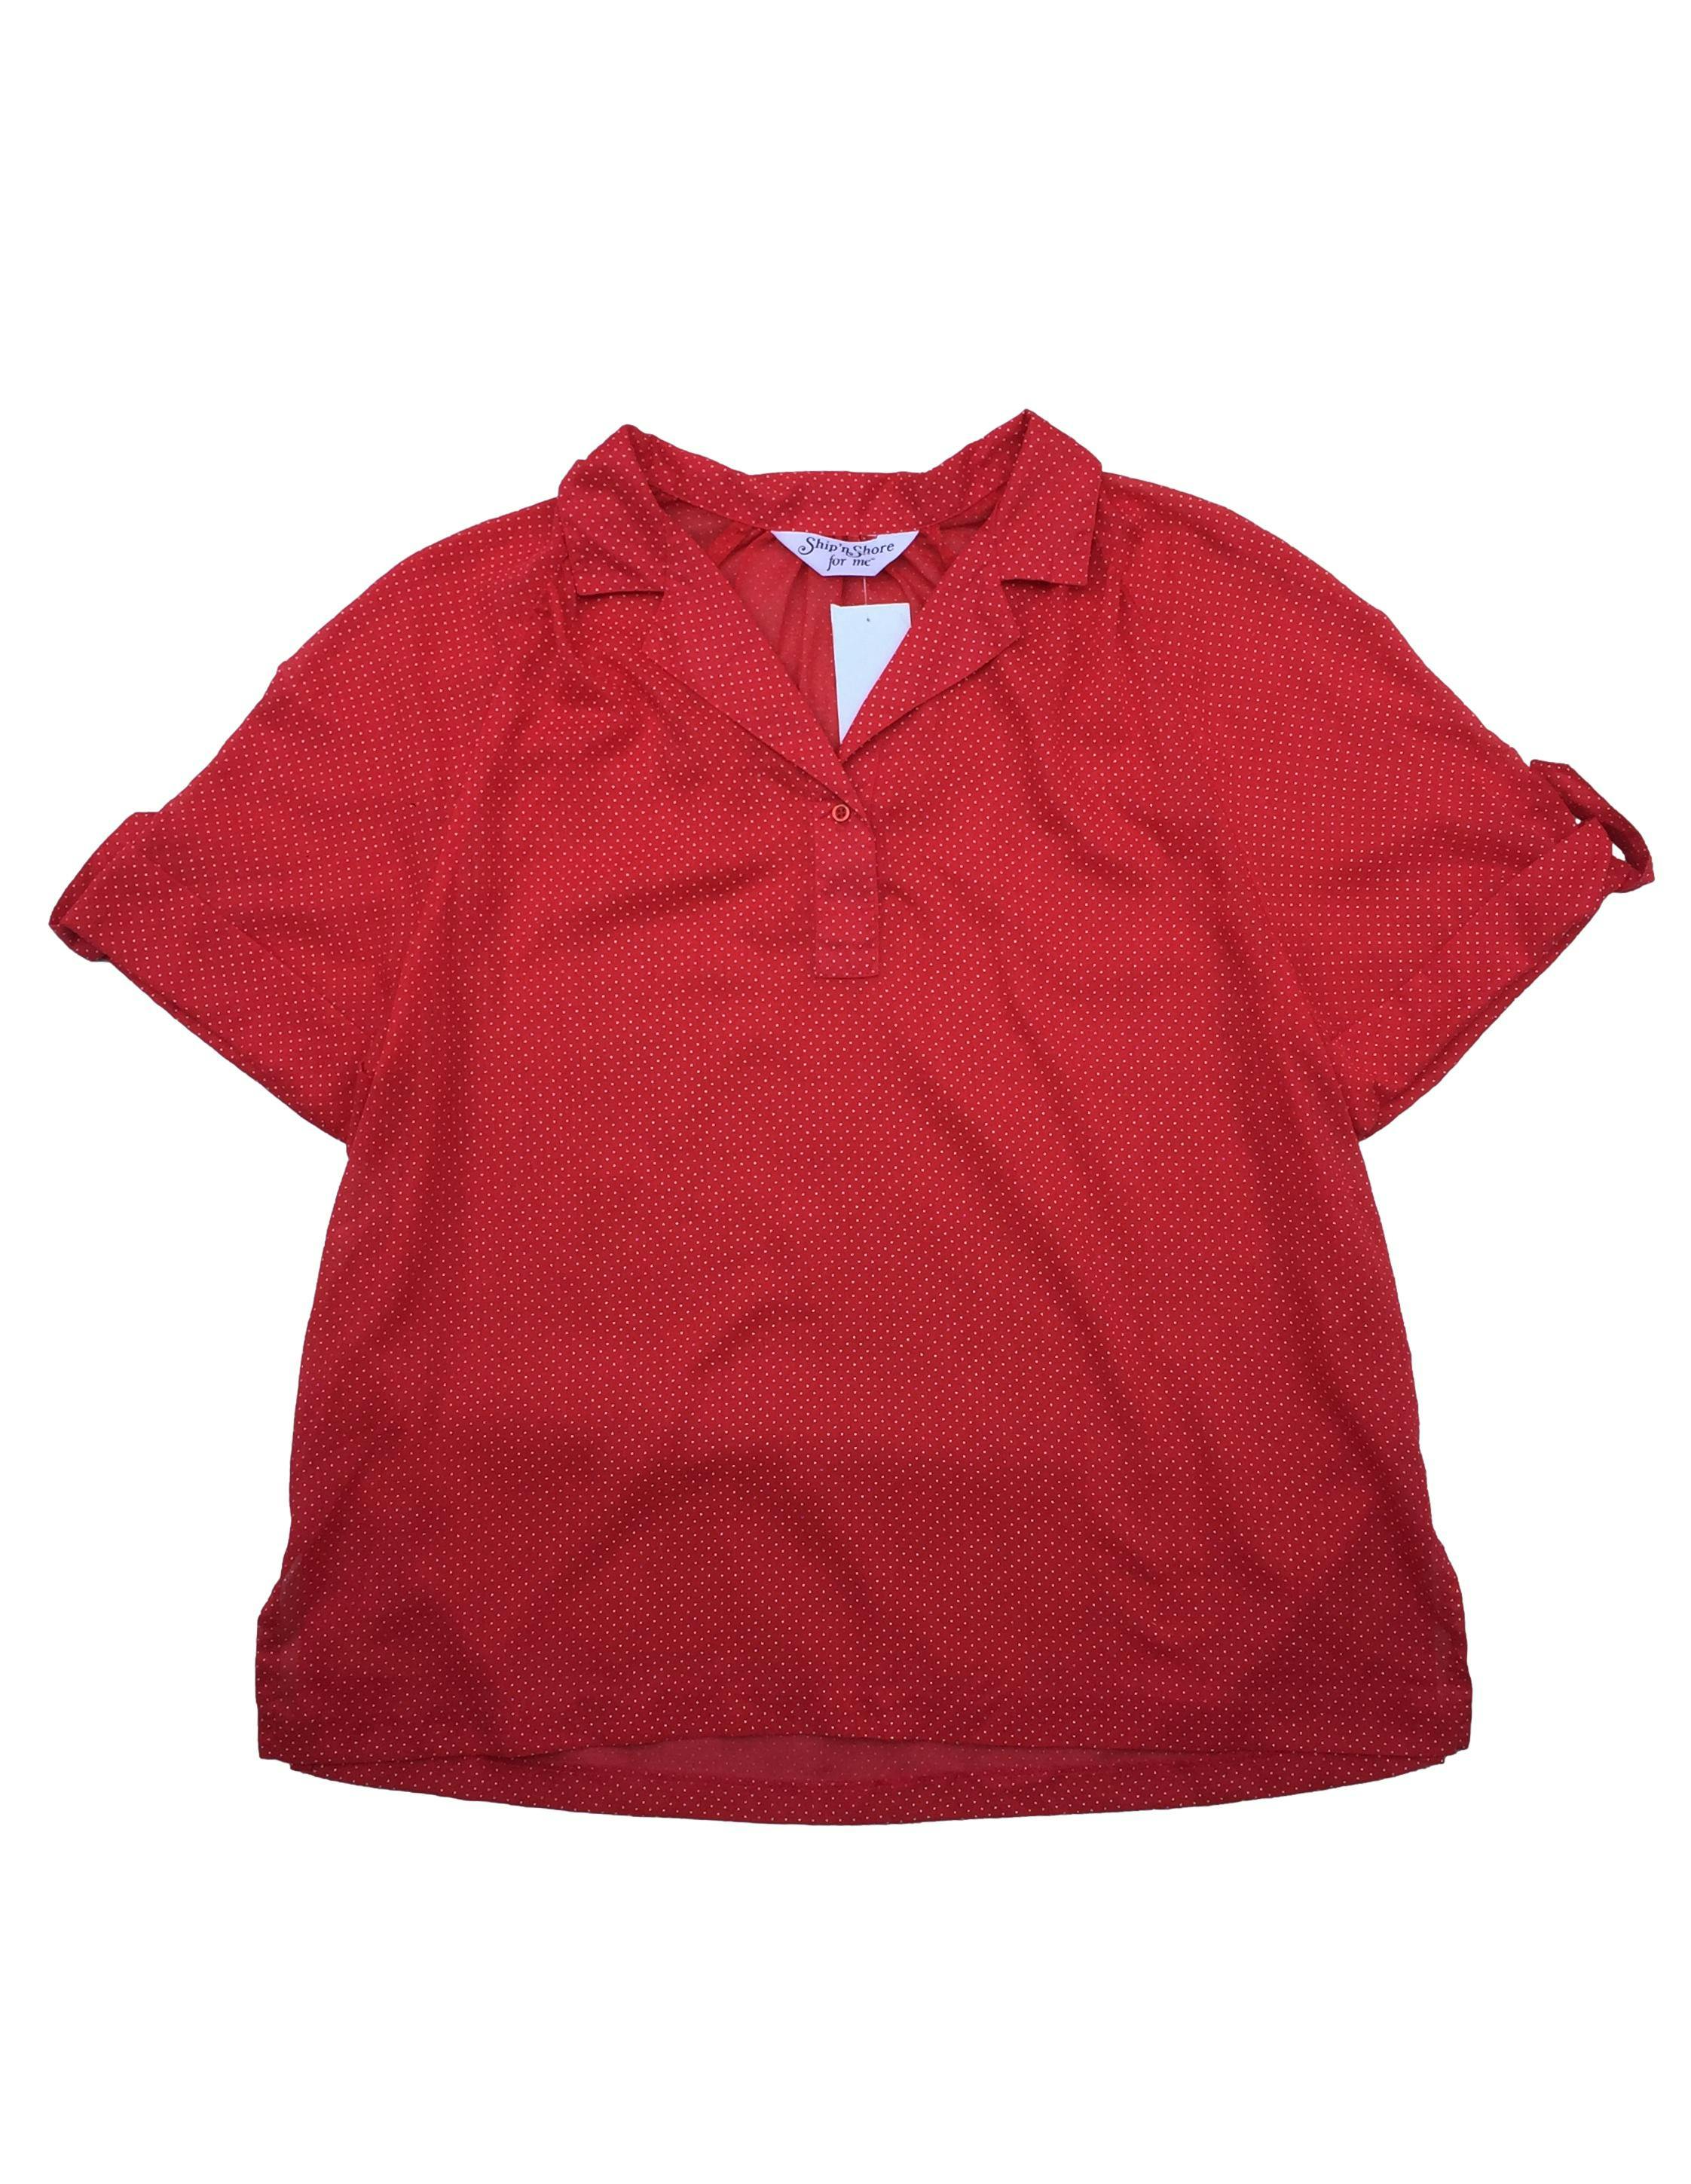 Blusa roja con puntos blancos, tela fresa, cuello camisero con un botón.  Busto: 120cm, Largo: 67cm